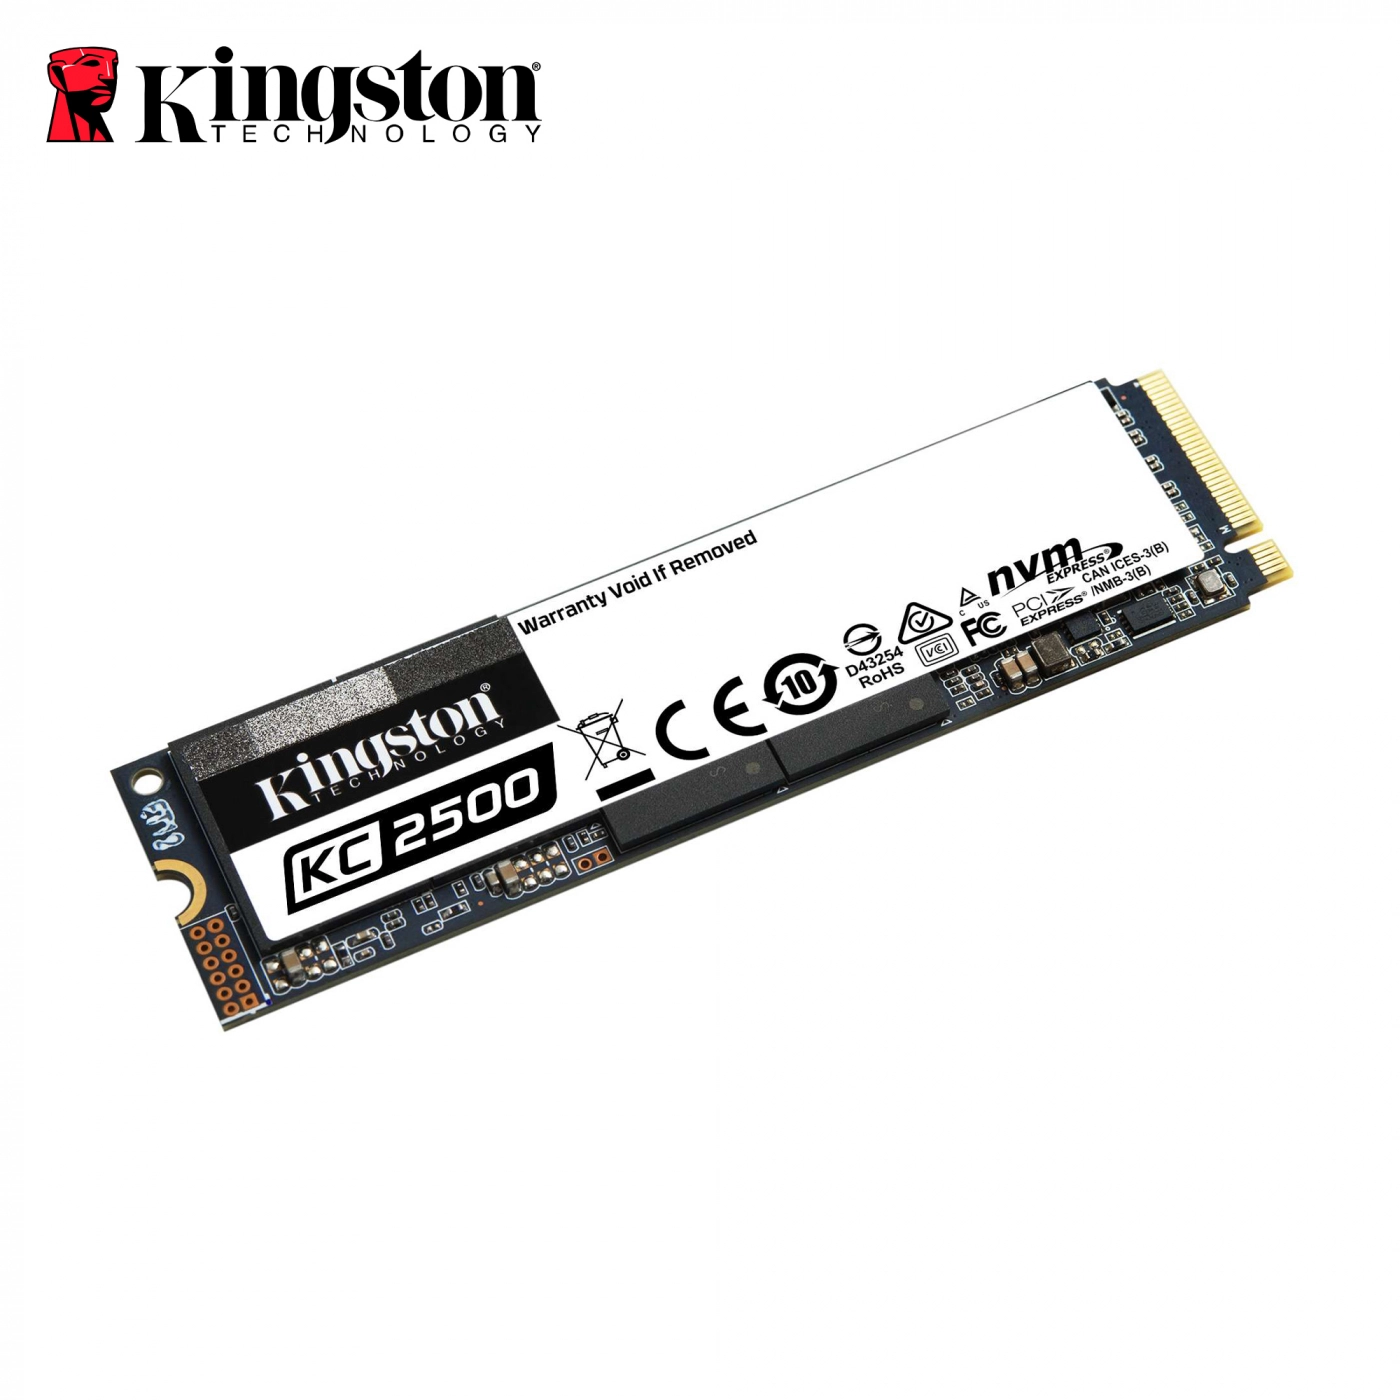 Купити SSD Kingston KC2500 SKC2500M8/250G 250 ГБ - фото 2